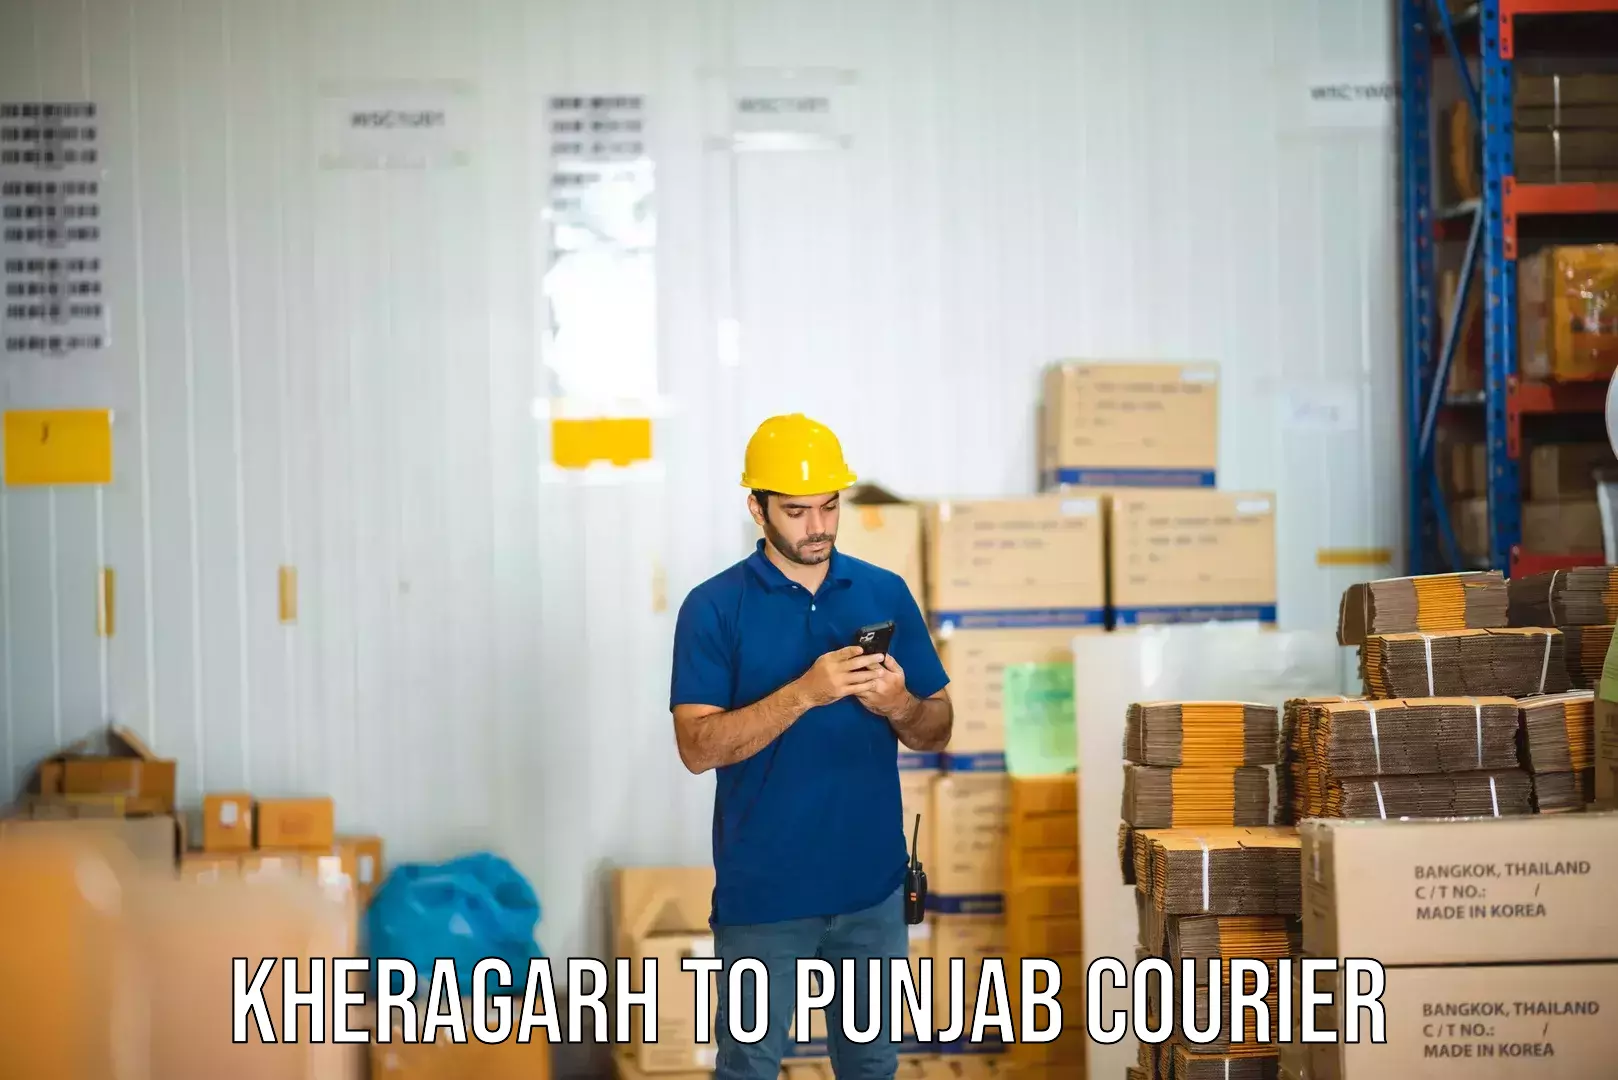 Efficient order fulfillment Kheragarh to Patiala